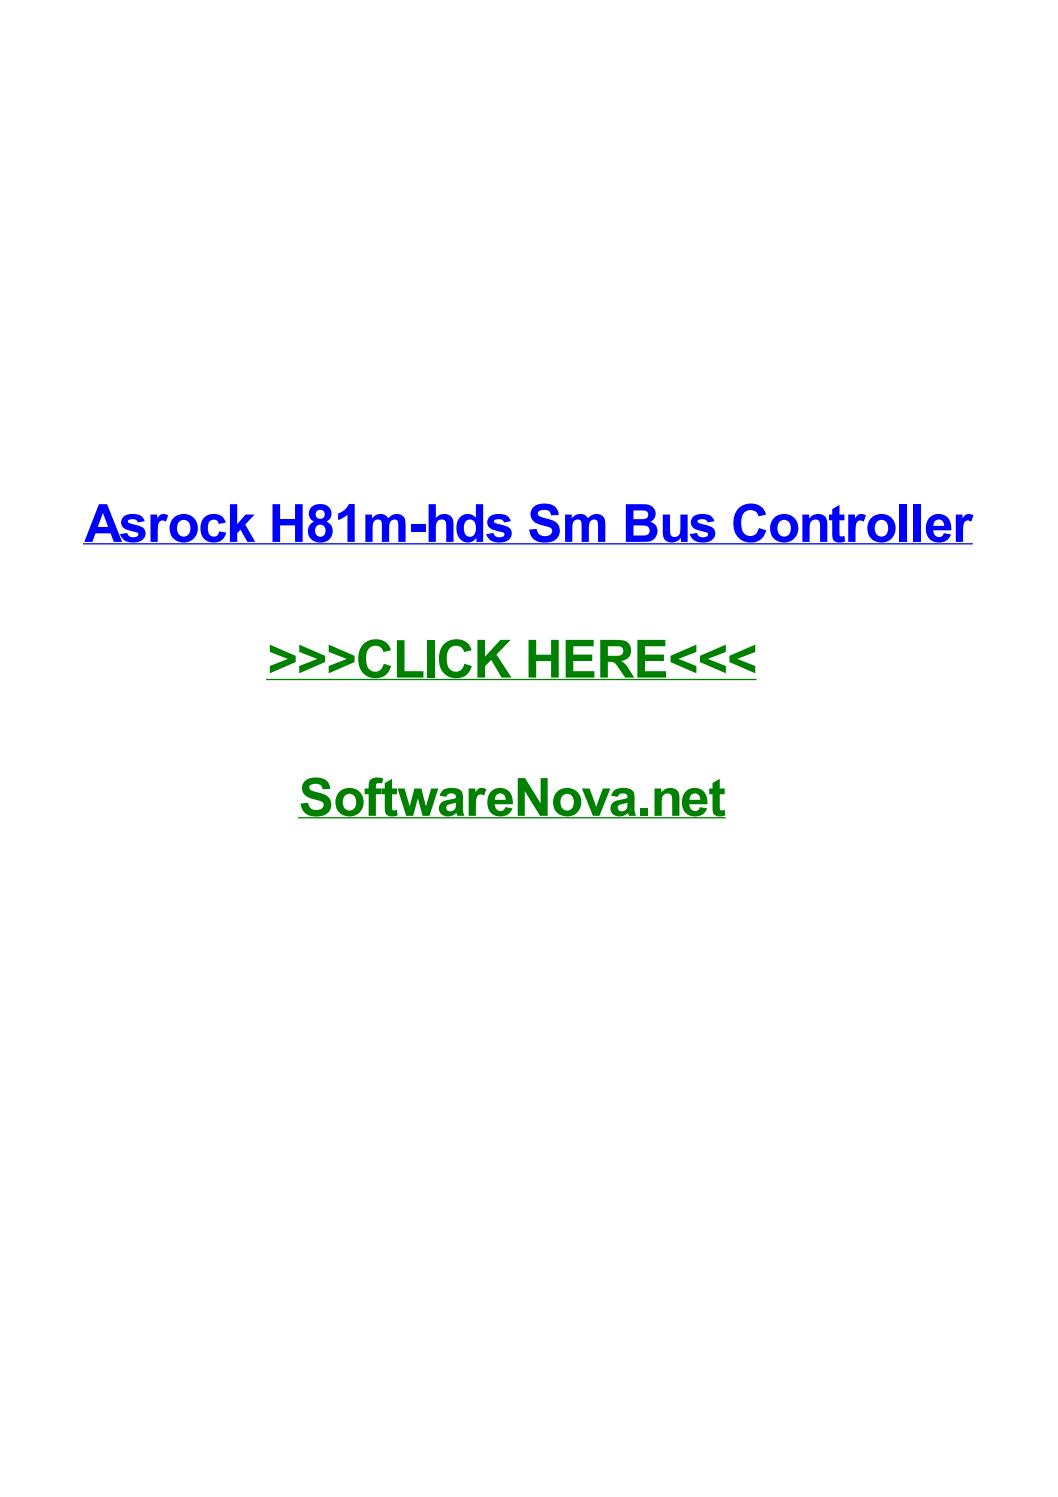 dell sm bus controller driver windows 7 64 bit download